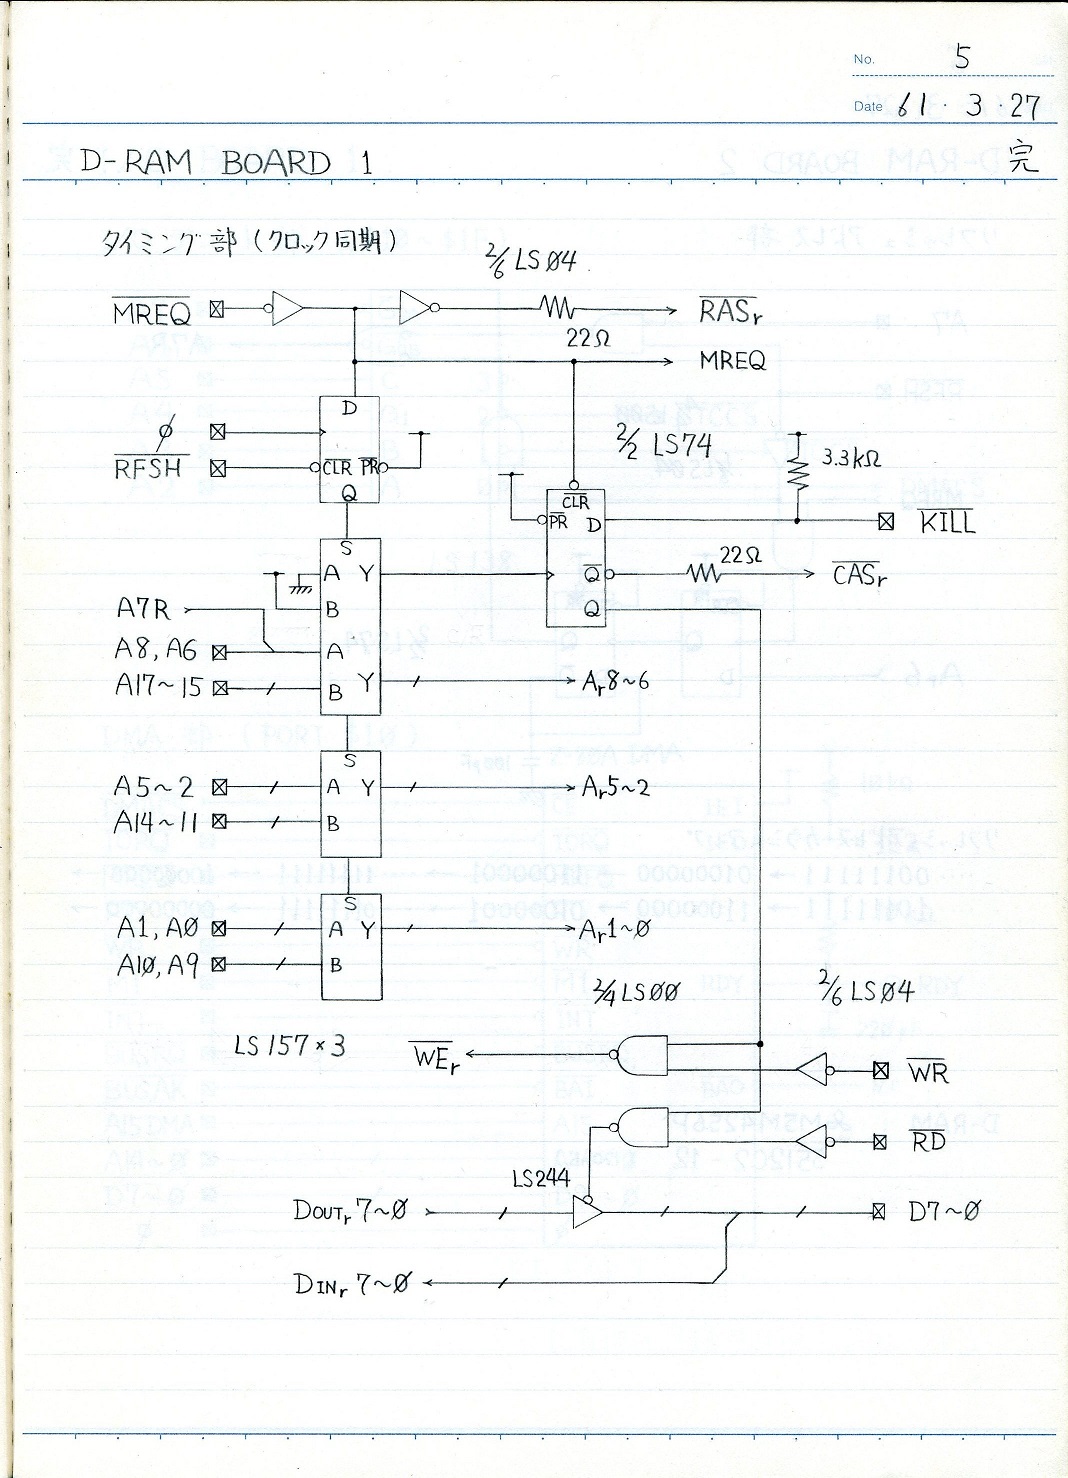 D-RAM board circuit 1